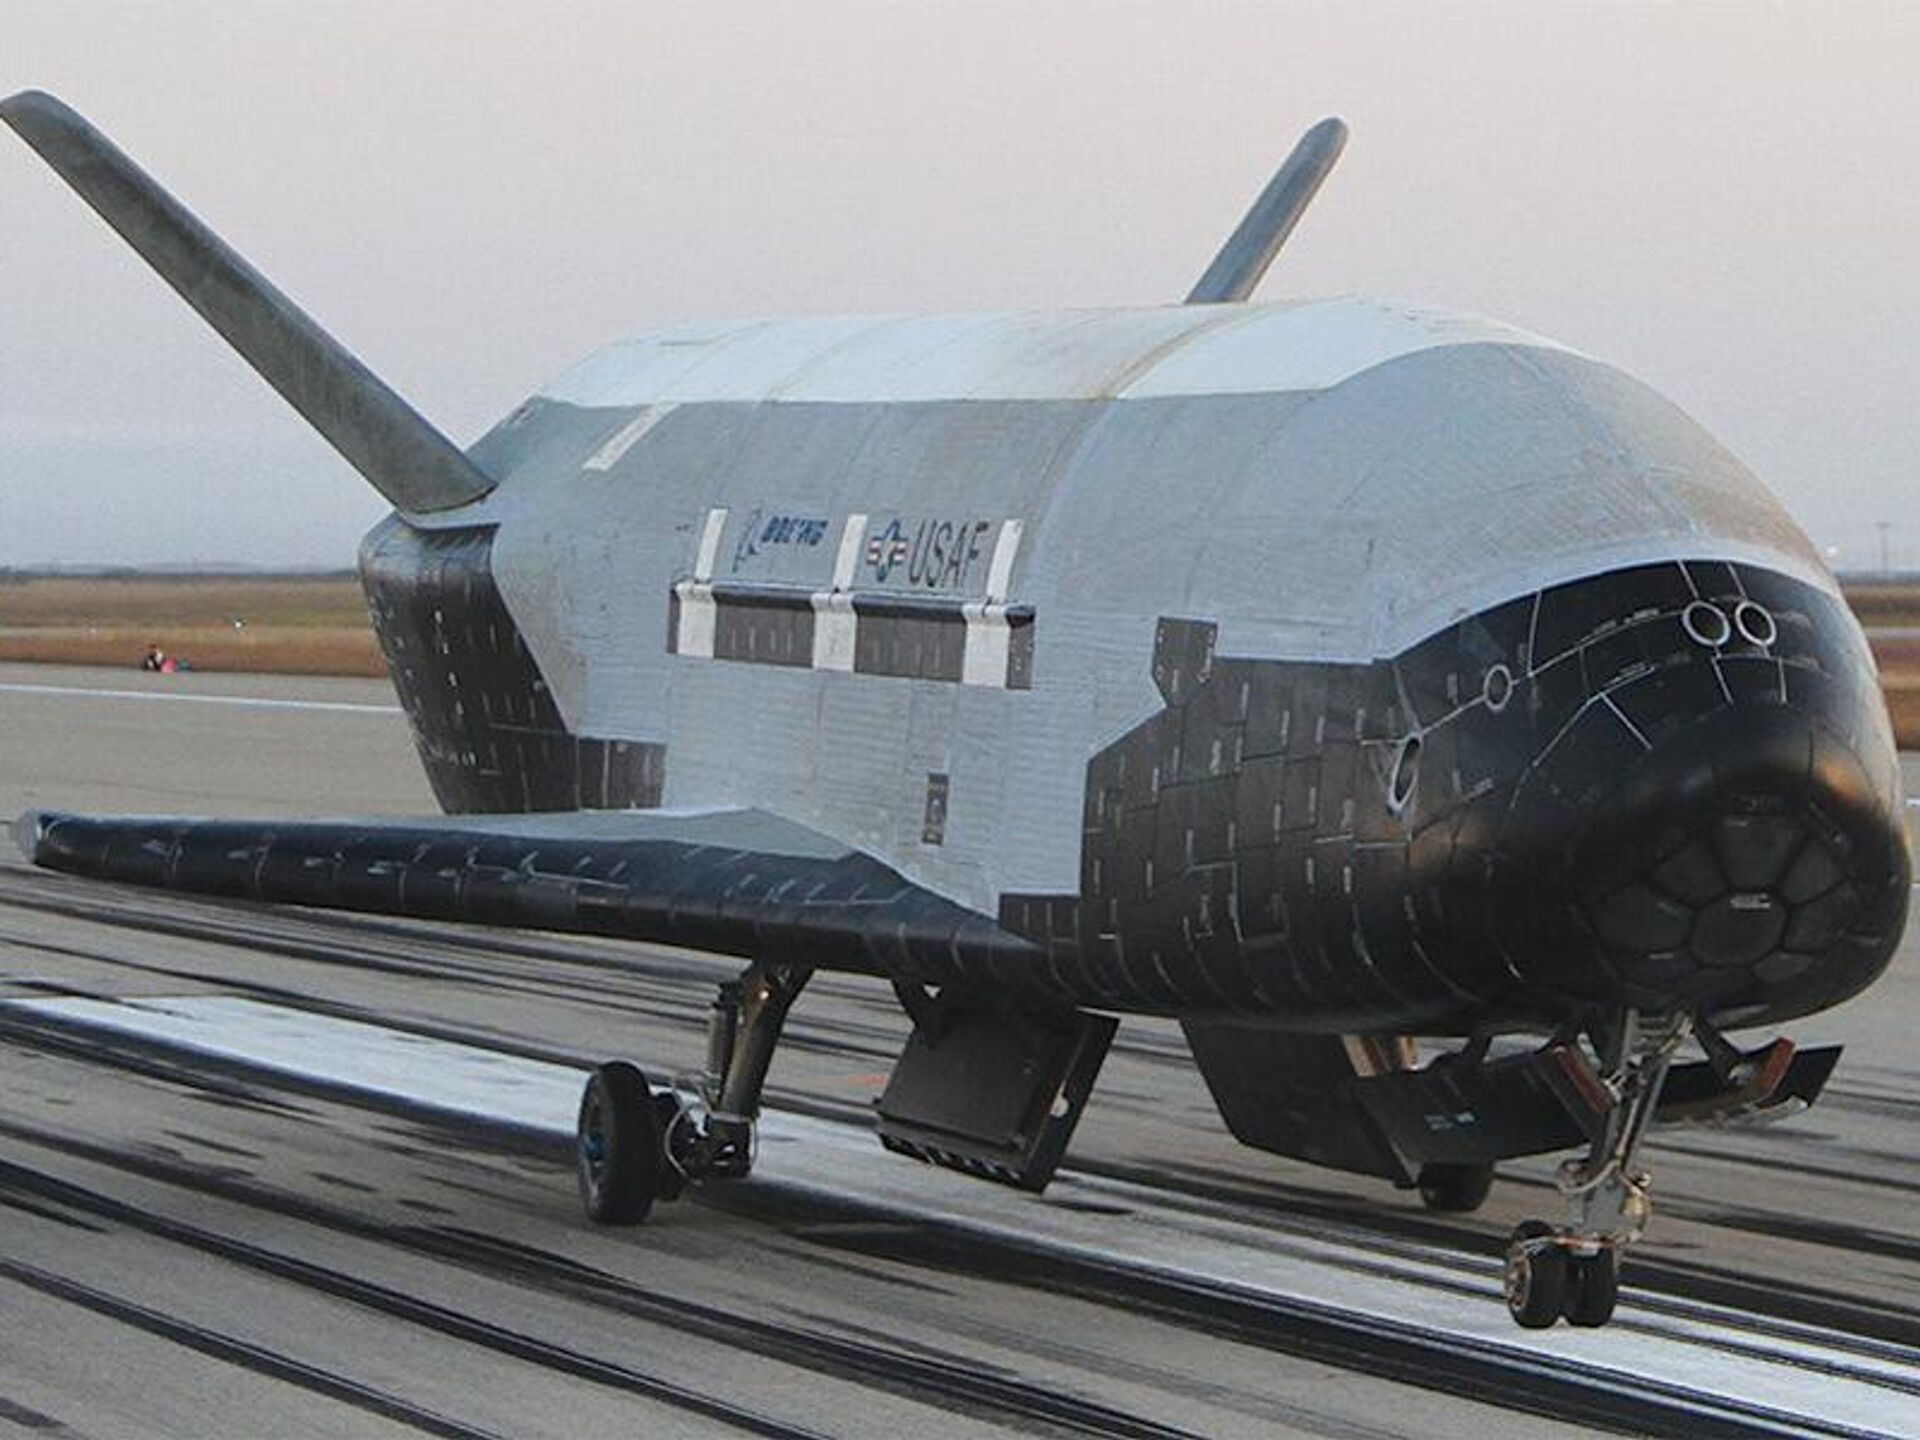 Х 37 0. Космоплан x-37b. Космический беспилотник x-37b. Беспилотник США X-37b. Боинг x37.